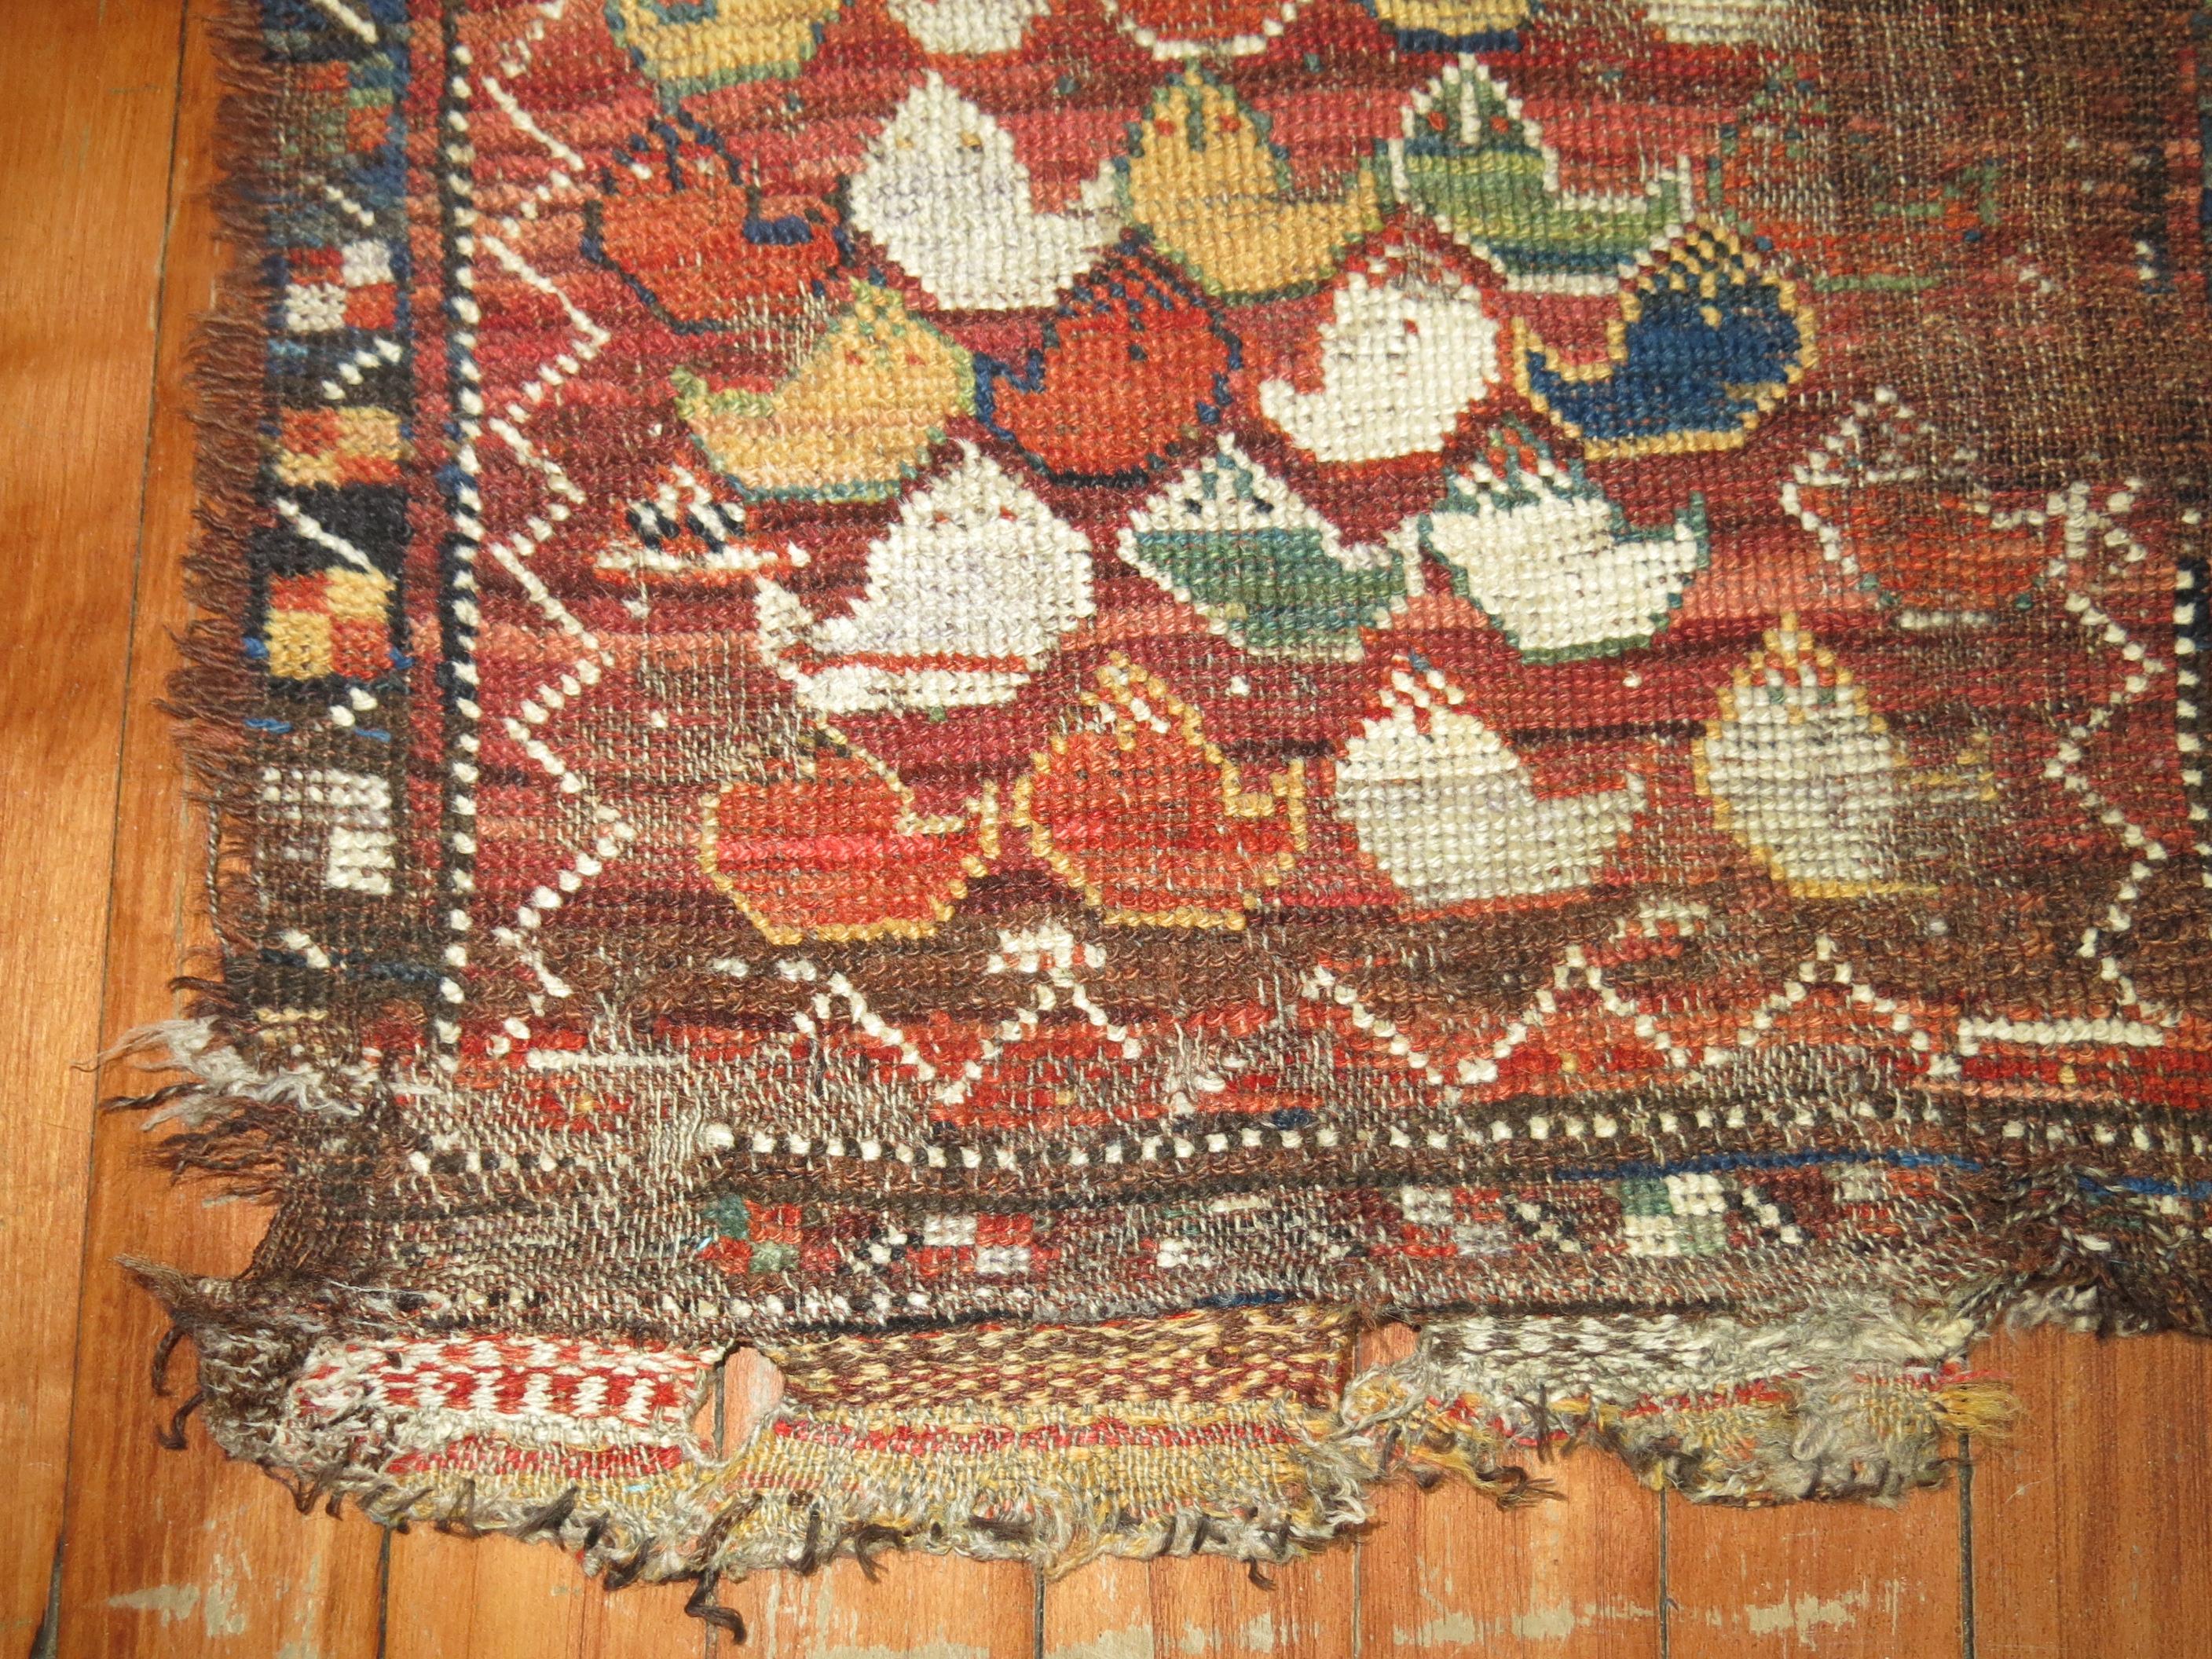 19th century Persian bagface.